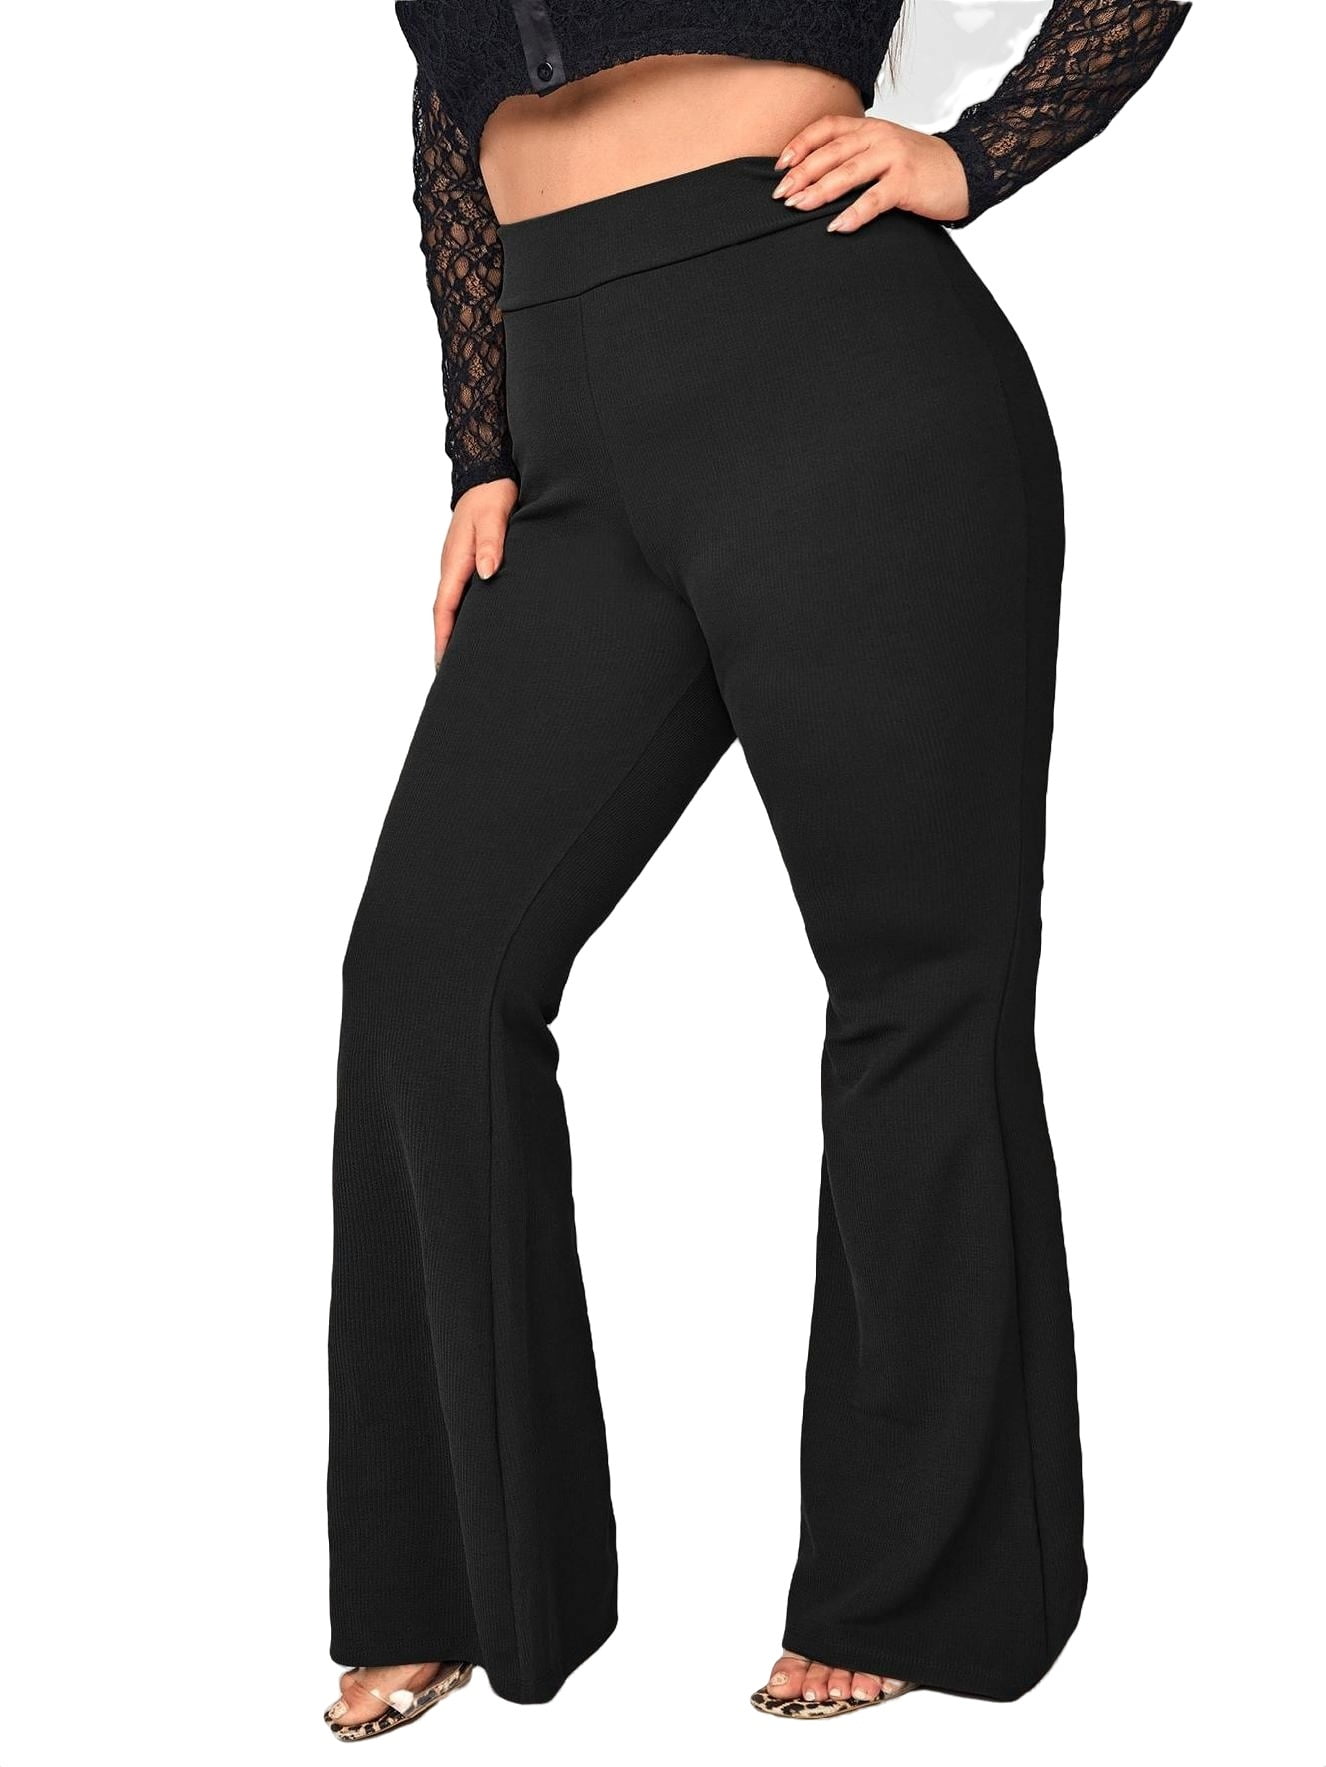 Elegant Solid Flare Leg Black Plus Size Pants (Women's) - Walmart.com